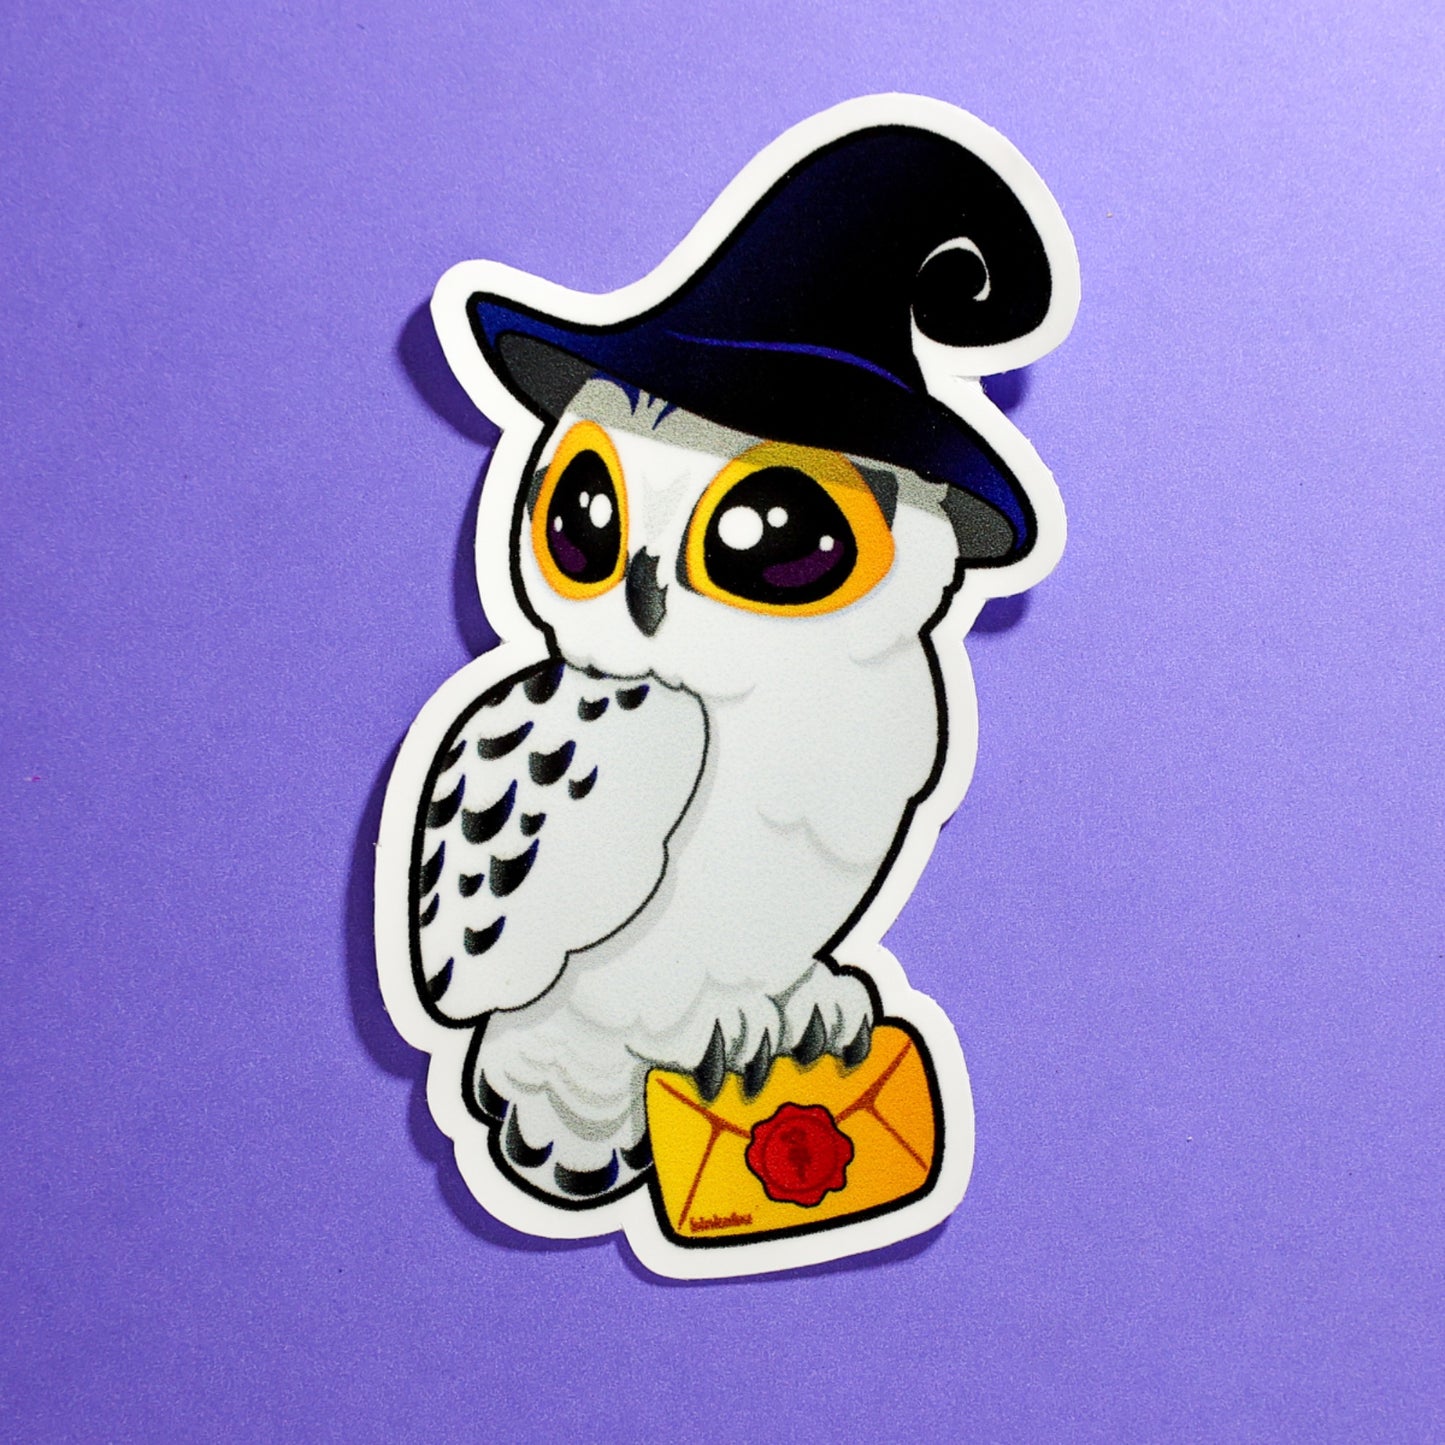 Gloss Vinyl Sticker - Snowy Owl Witch - Halloween Stickers